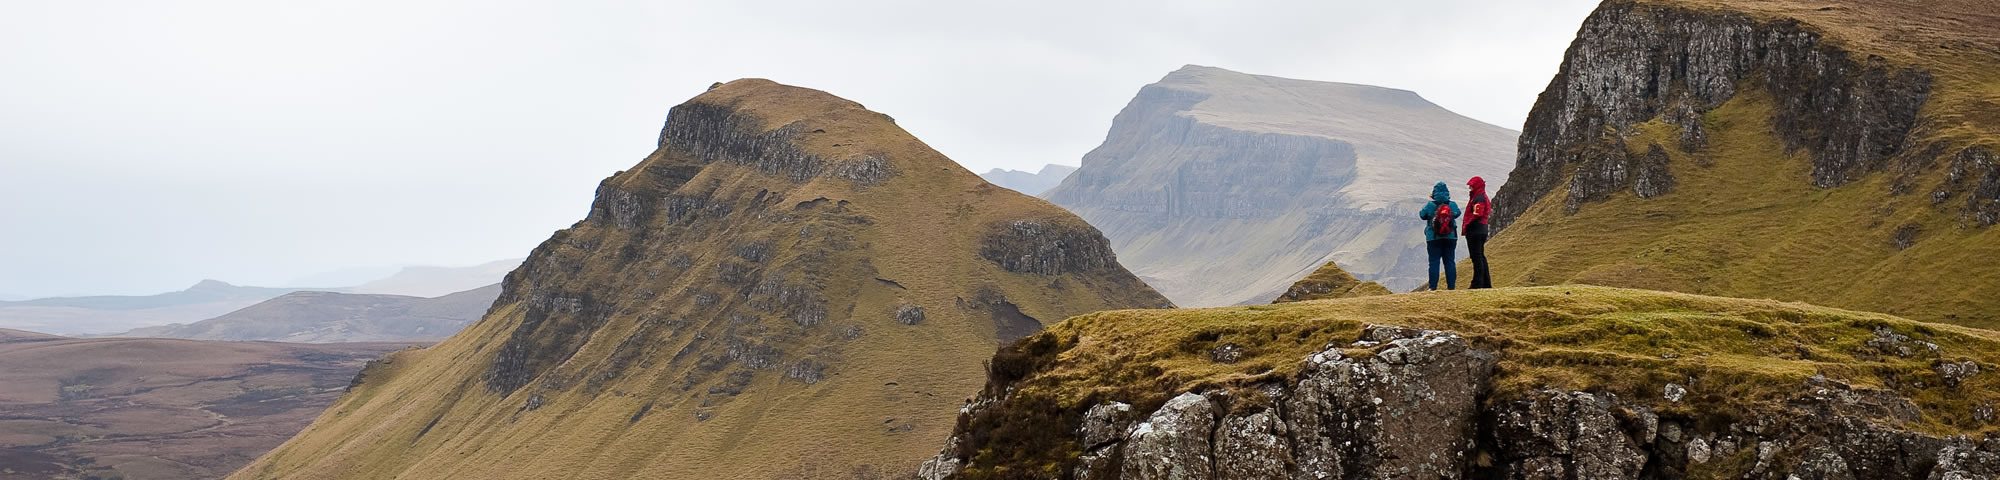 Quairing Mountains on the Isle of Skye